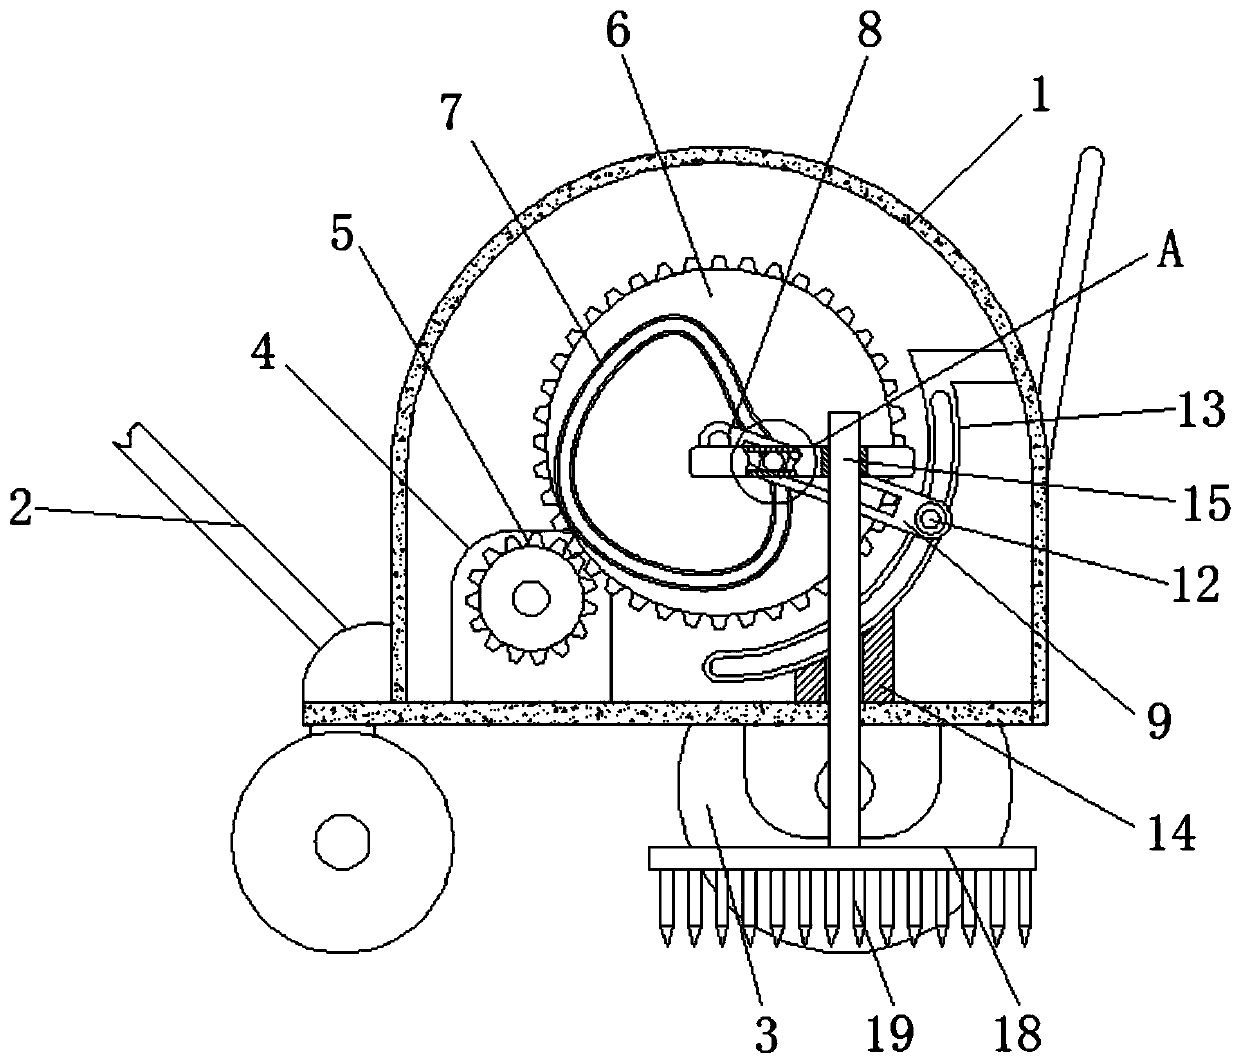 Adjustable lawn aerator based on convex guide rail transmission principle